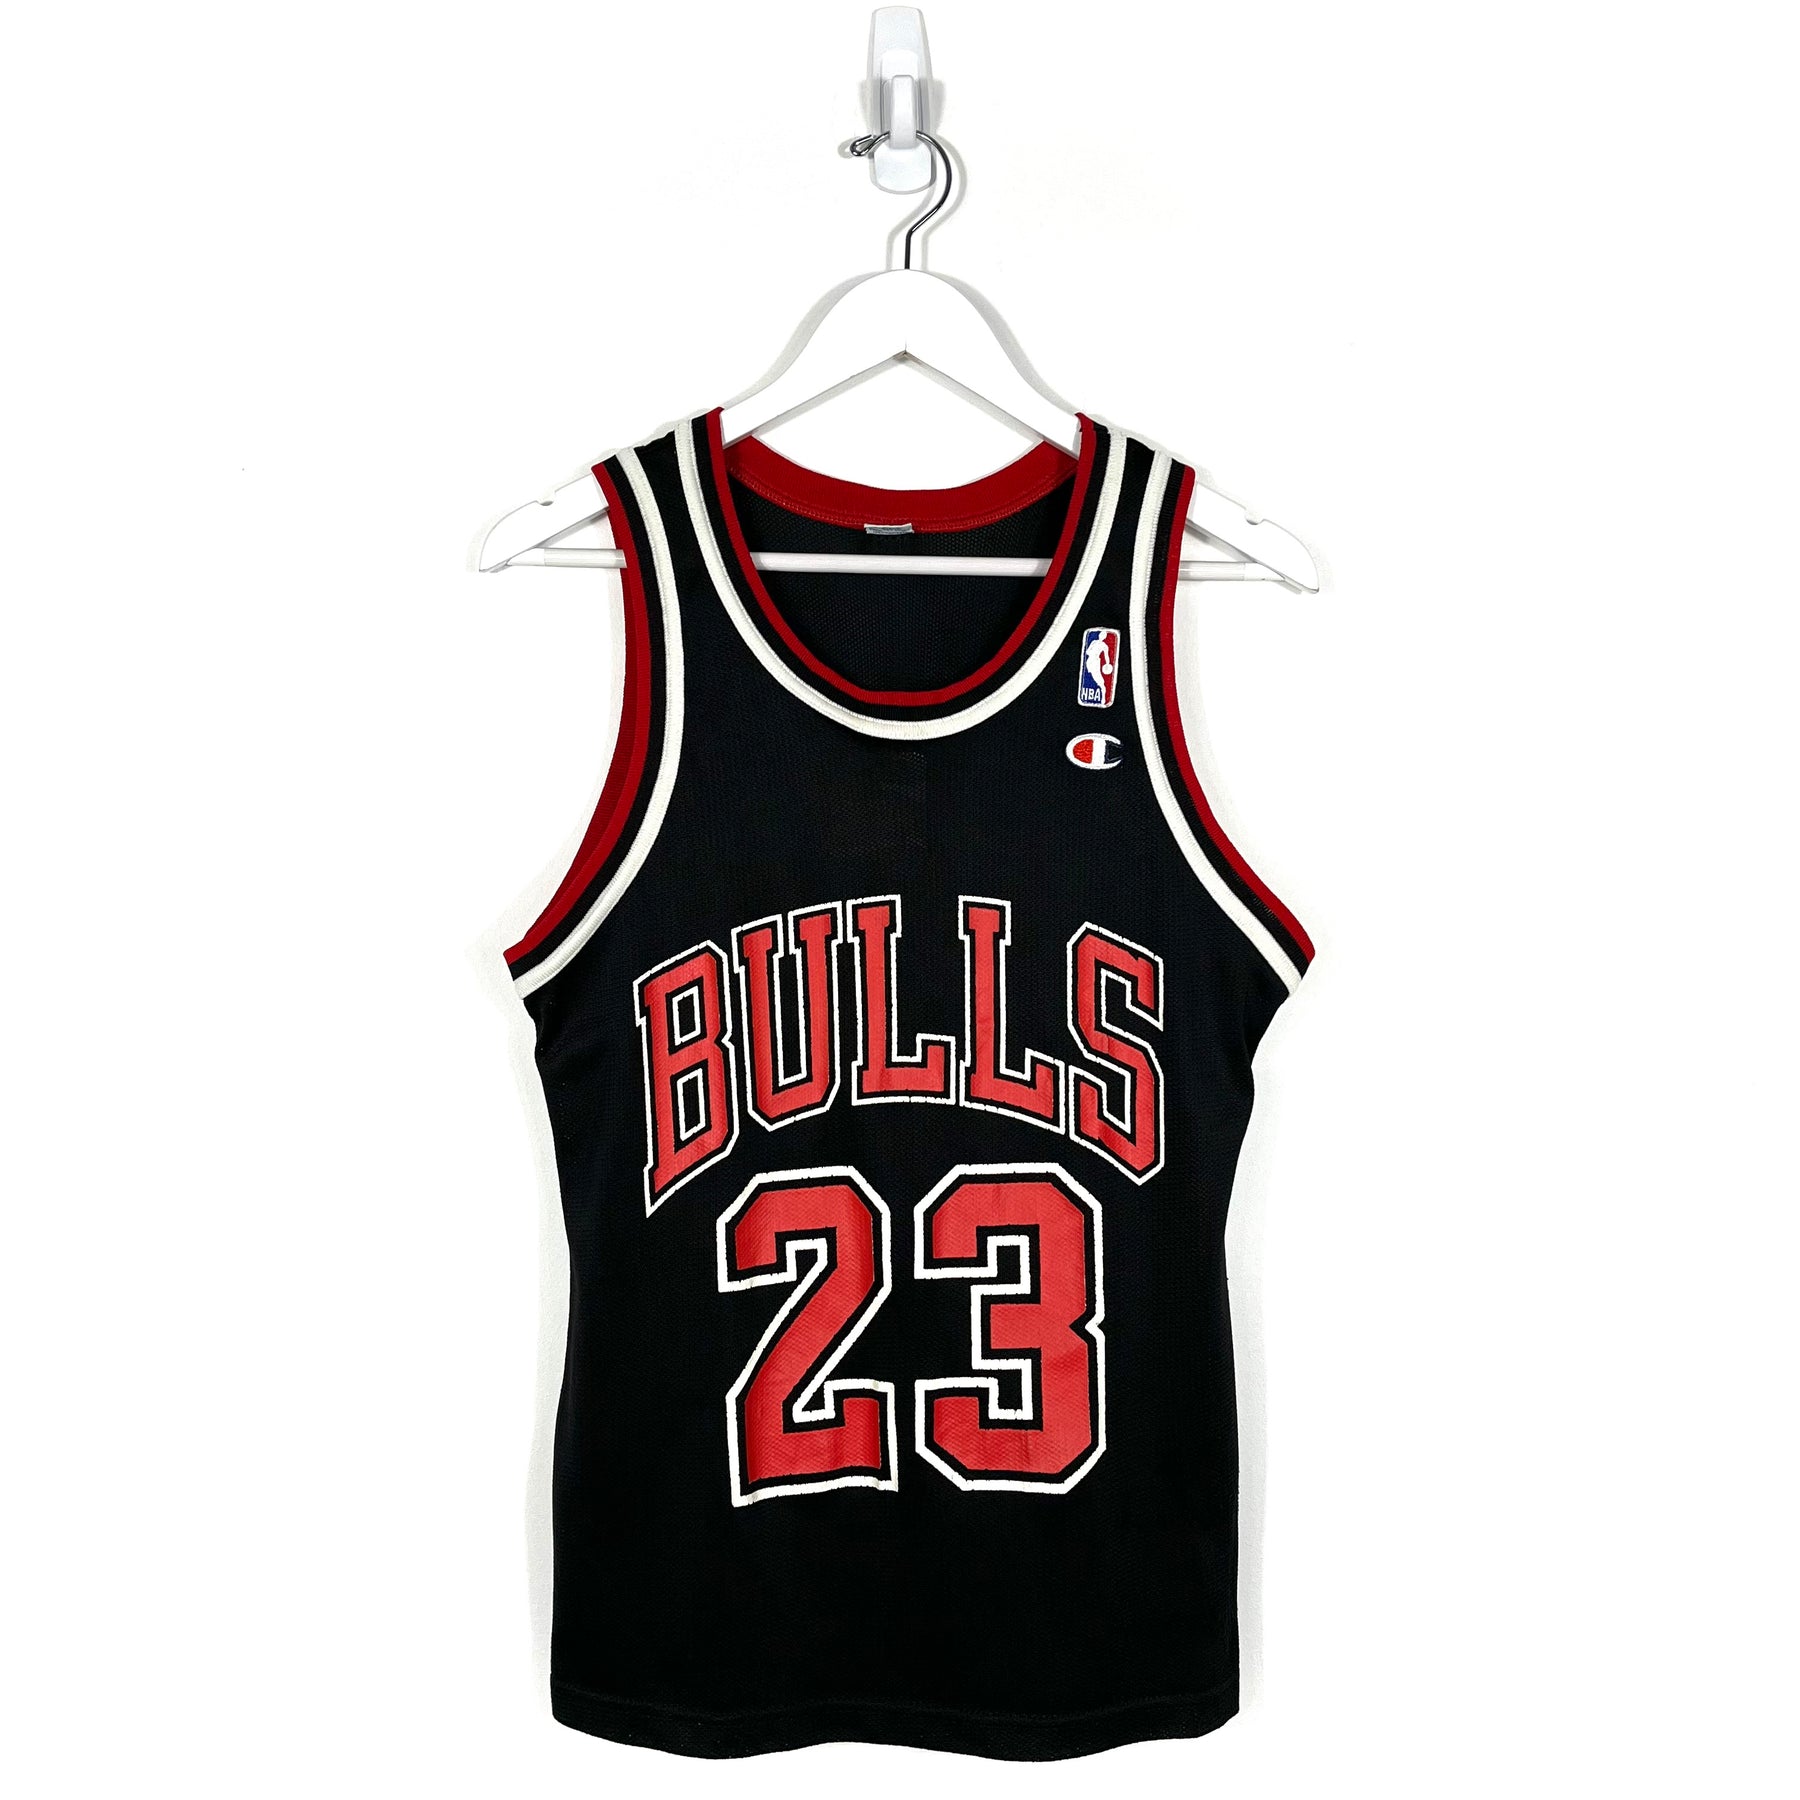 Vintage Champion NBA Chicago Bulls Michael Jordan #23 Jersey - Women's XS